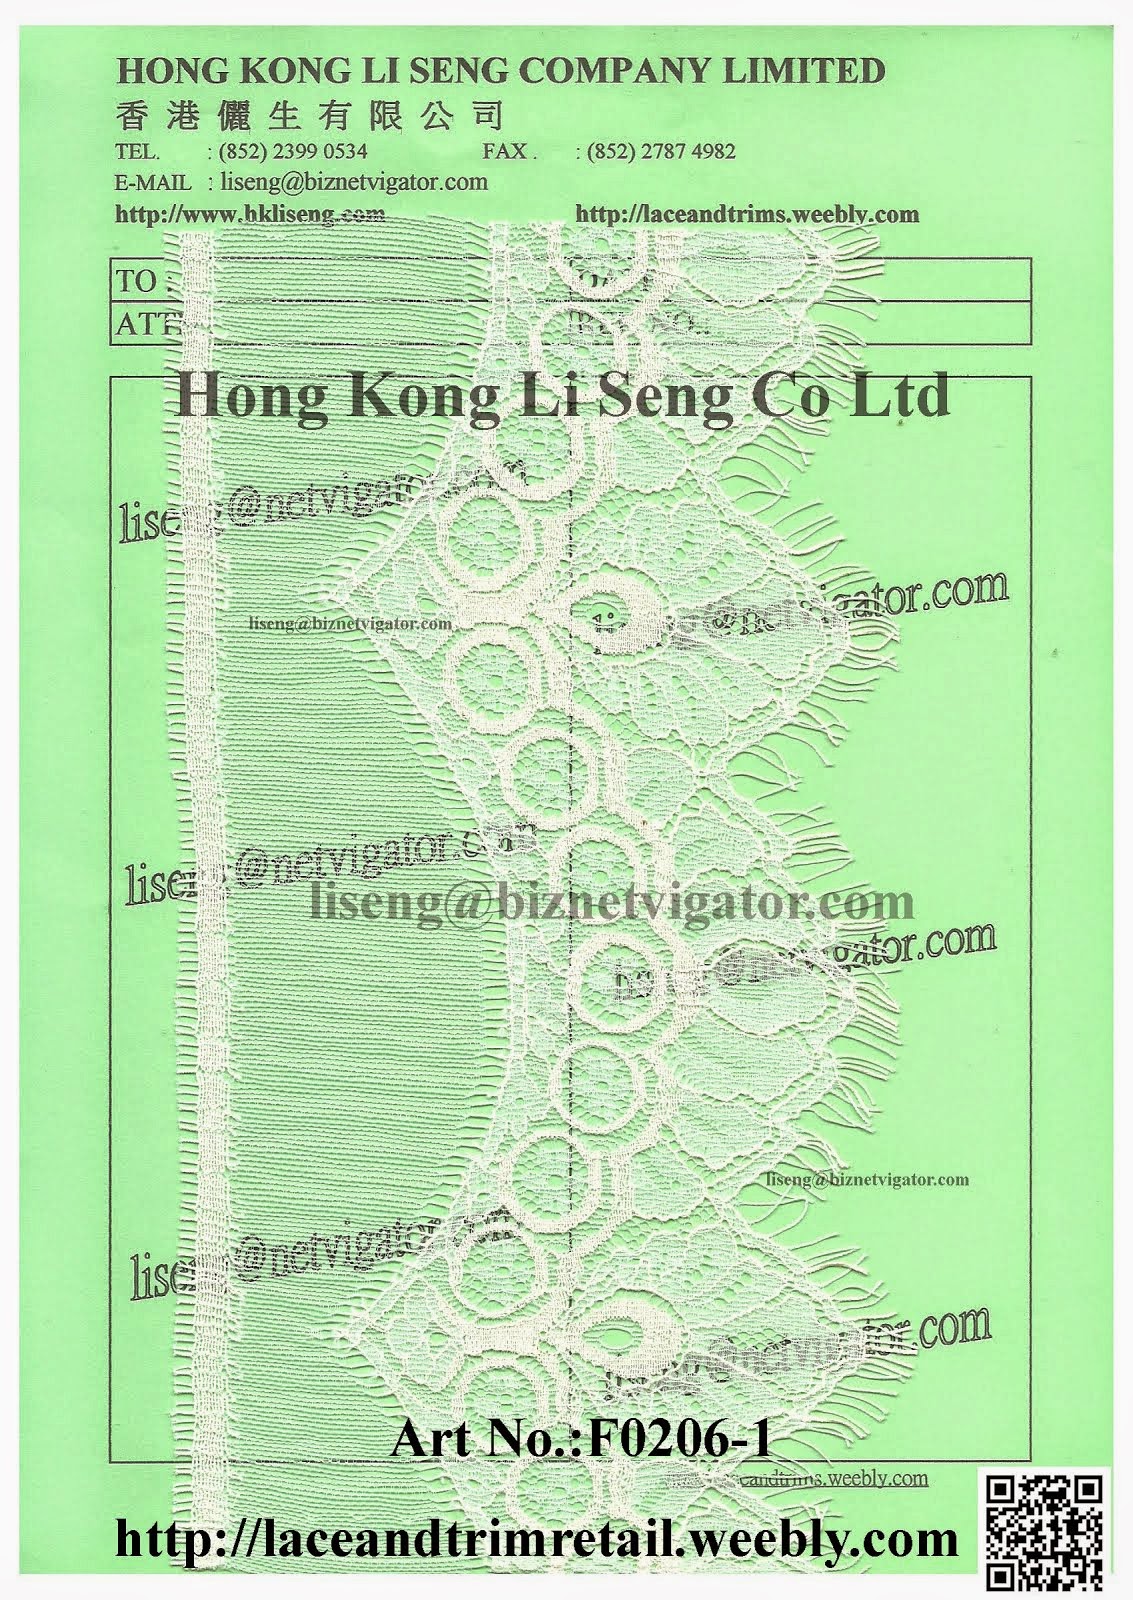 Producing Eyelash Lace Pattern - Hong Kong Li Seng Co Ltd